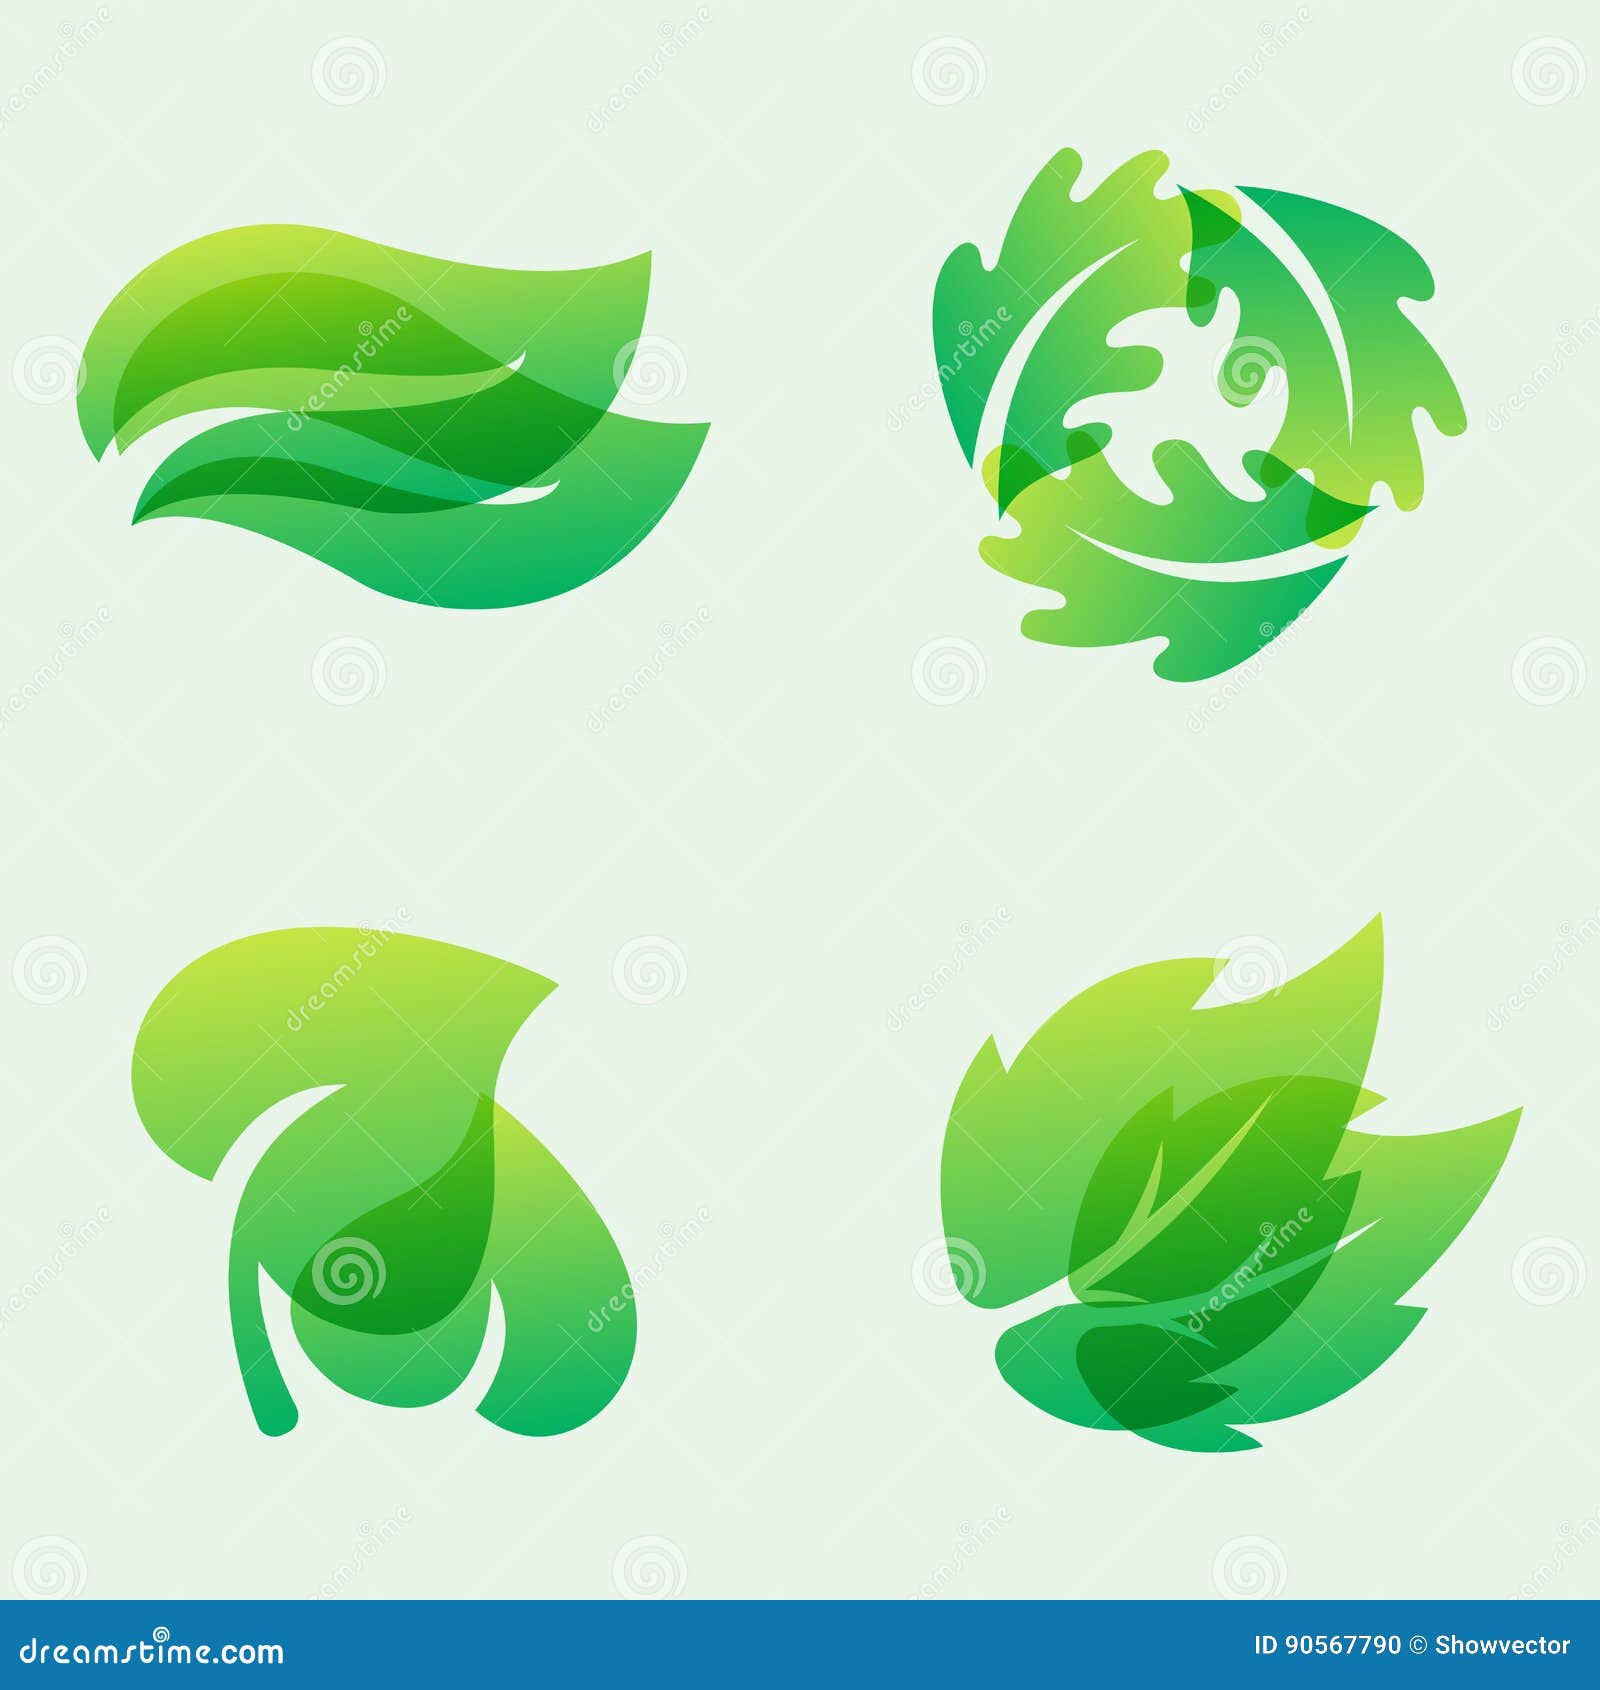 Premium Vector  Oakley o green leaf ecology nature element